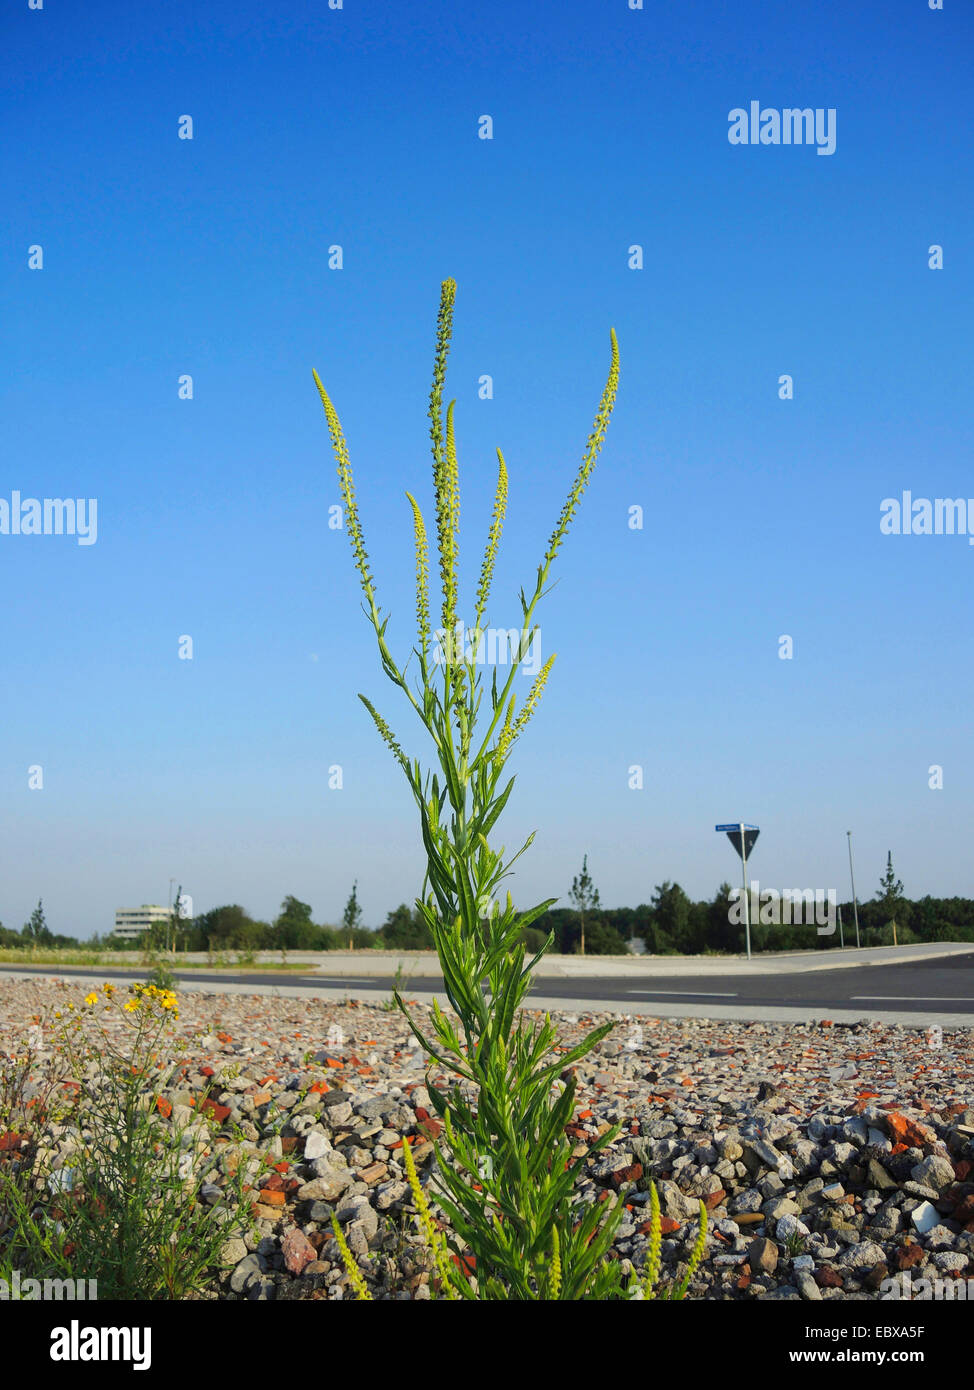 Dyer's rocket, Dyer's weed, Weld, Woold, Yellow weed (Reseda luteola), blooming on a roadside, Germany, North Rhine-Westphalia Stock Photo